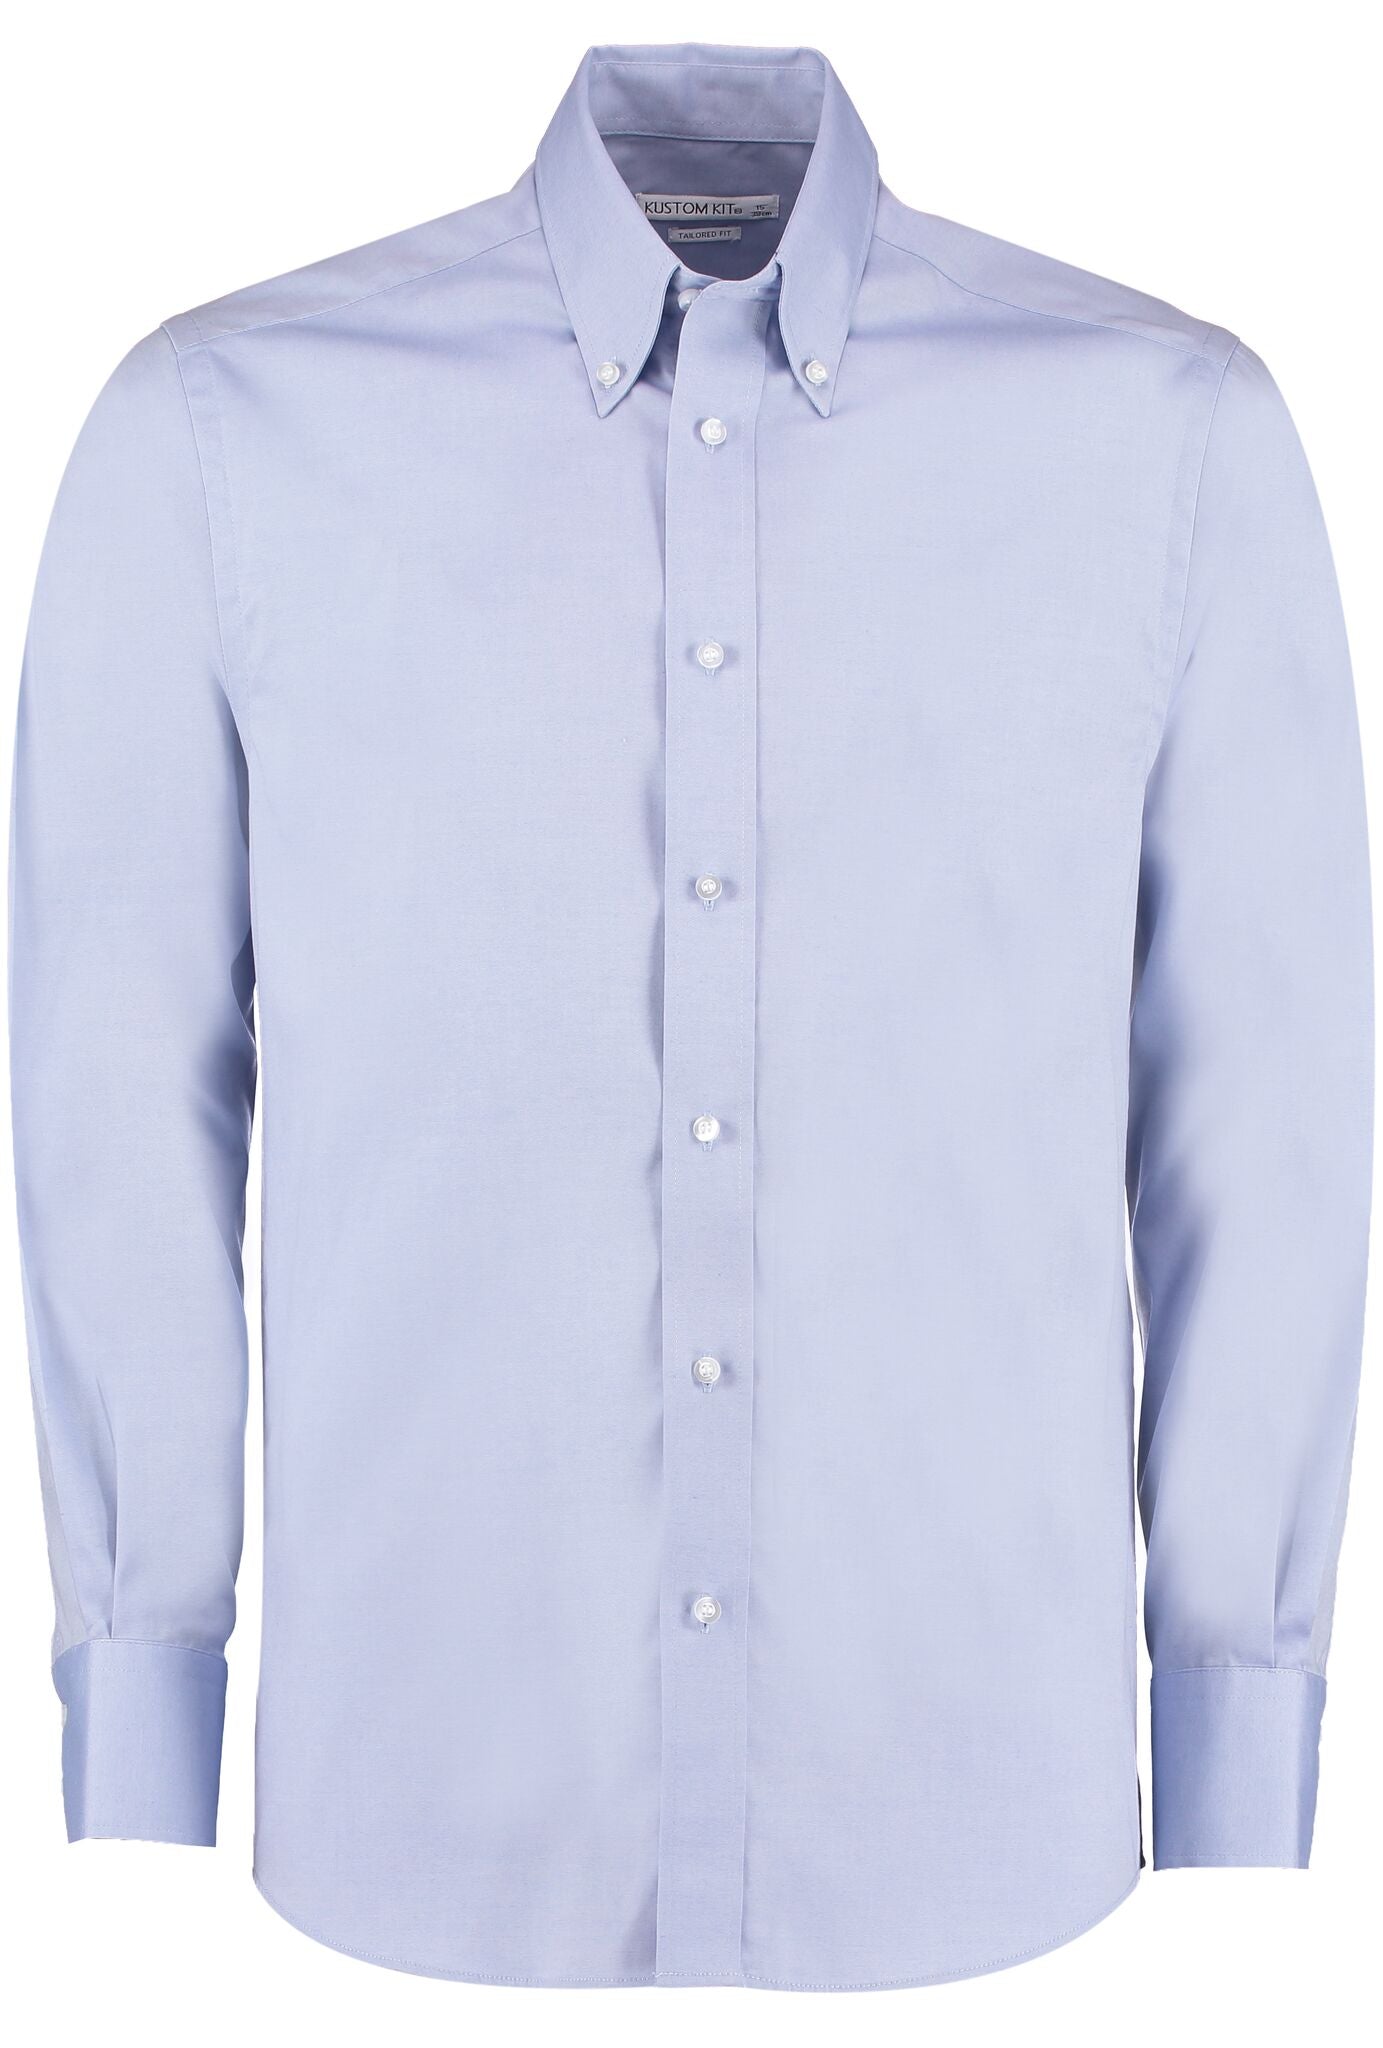 Kustom Kit Tailored Fit Premium Oxford Shirt Long Sleeve (KK188)